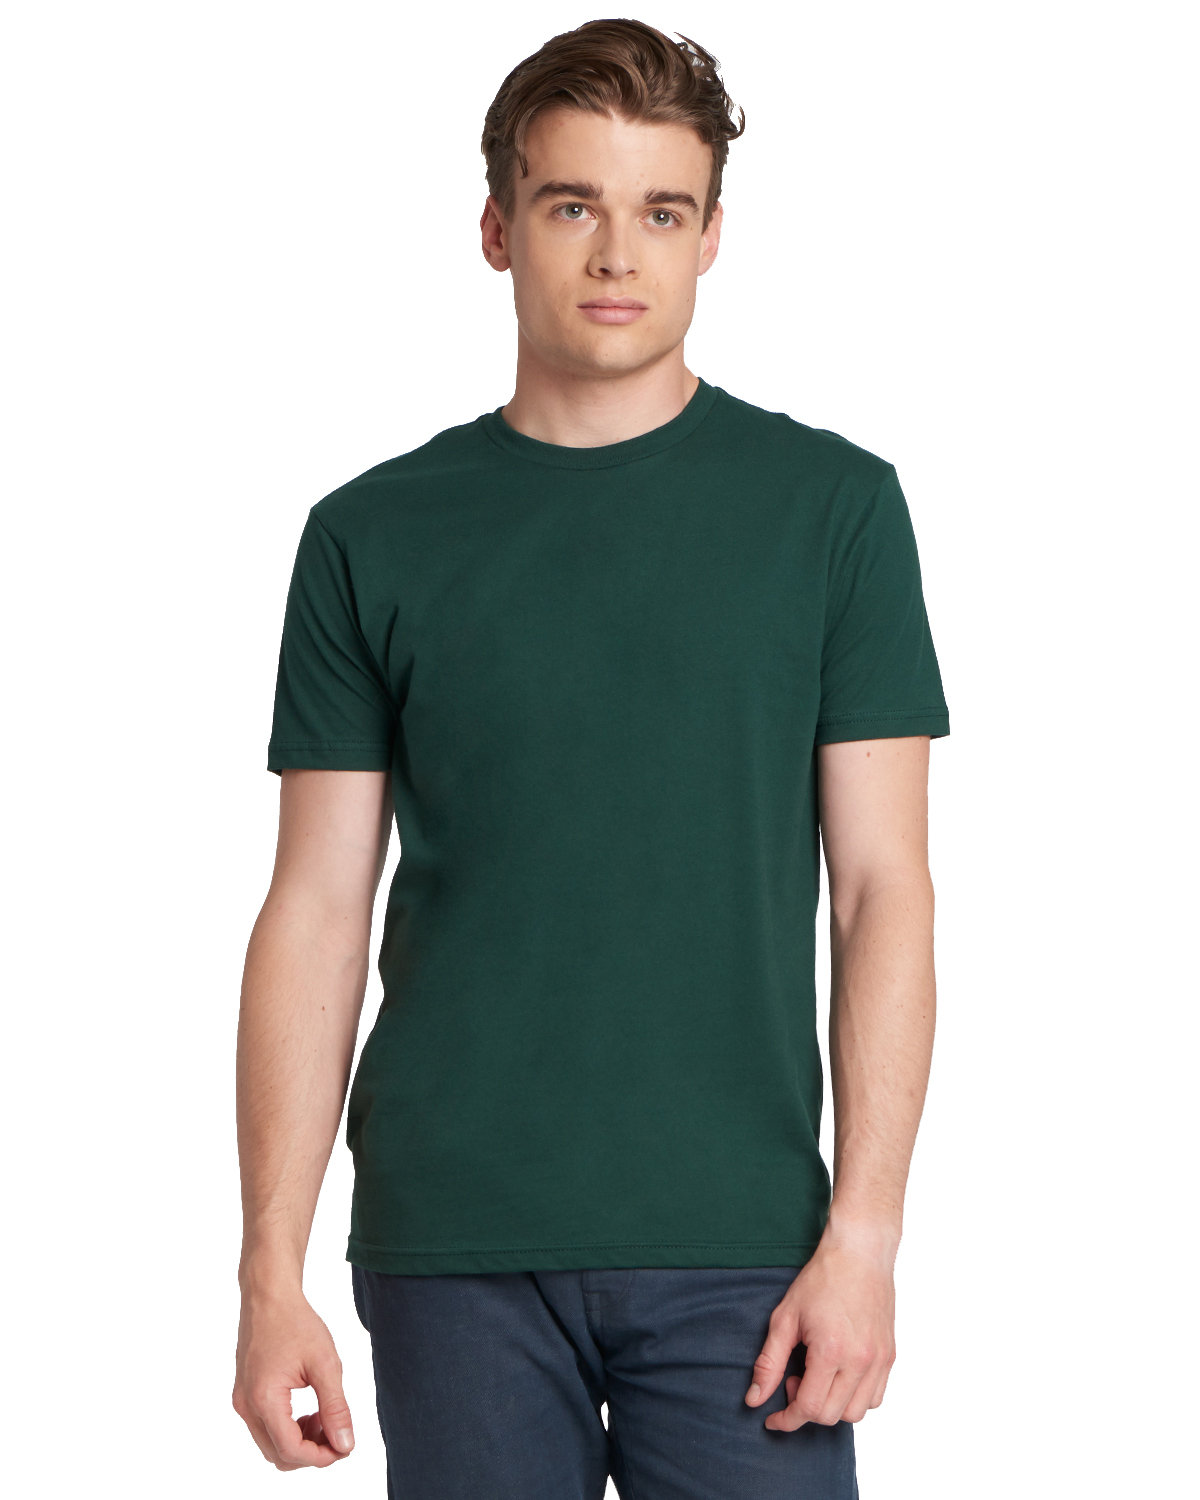 Next Level Unisex Cotton Ringer T-Shirt Natural/Forest Green M